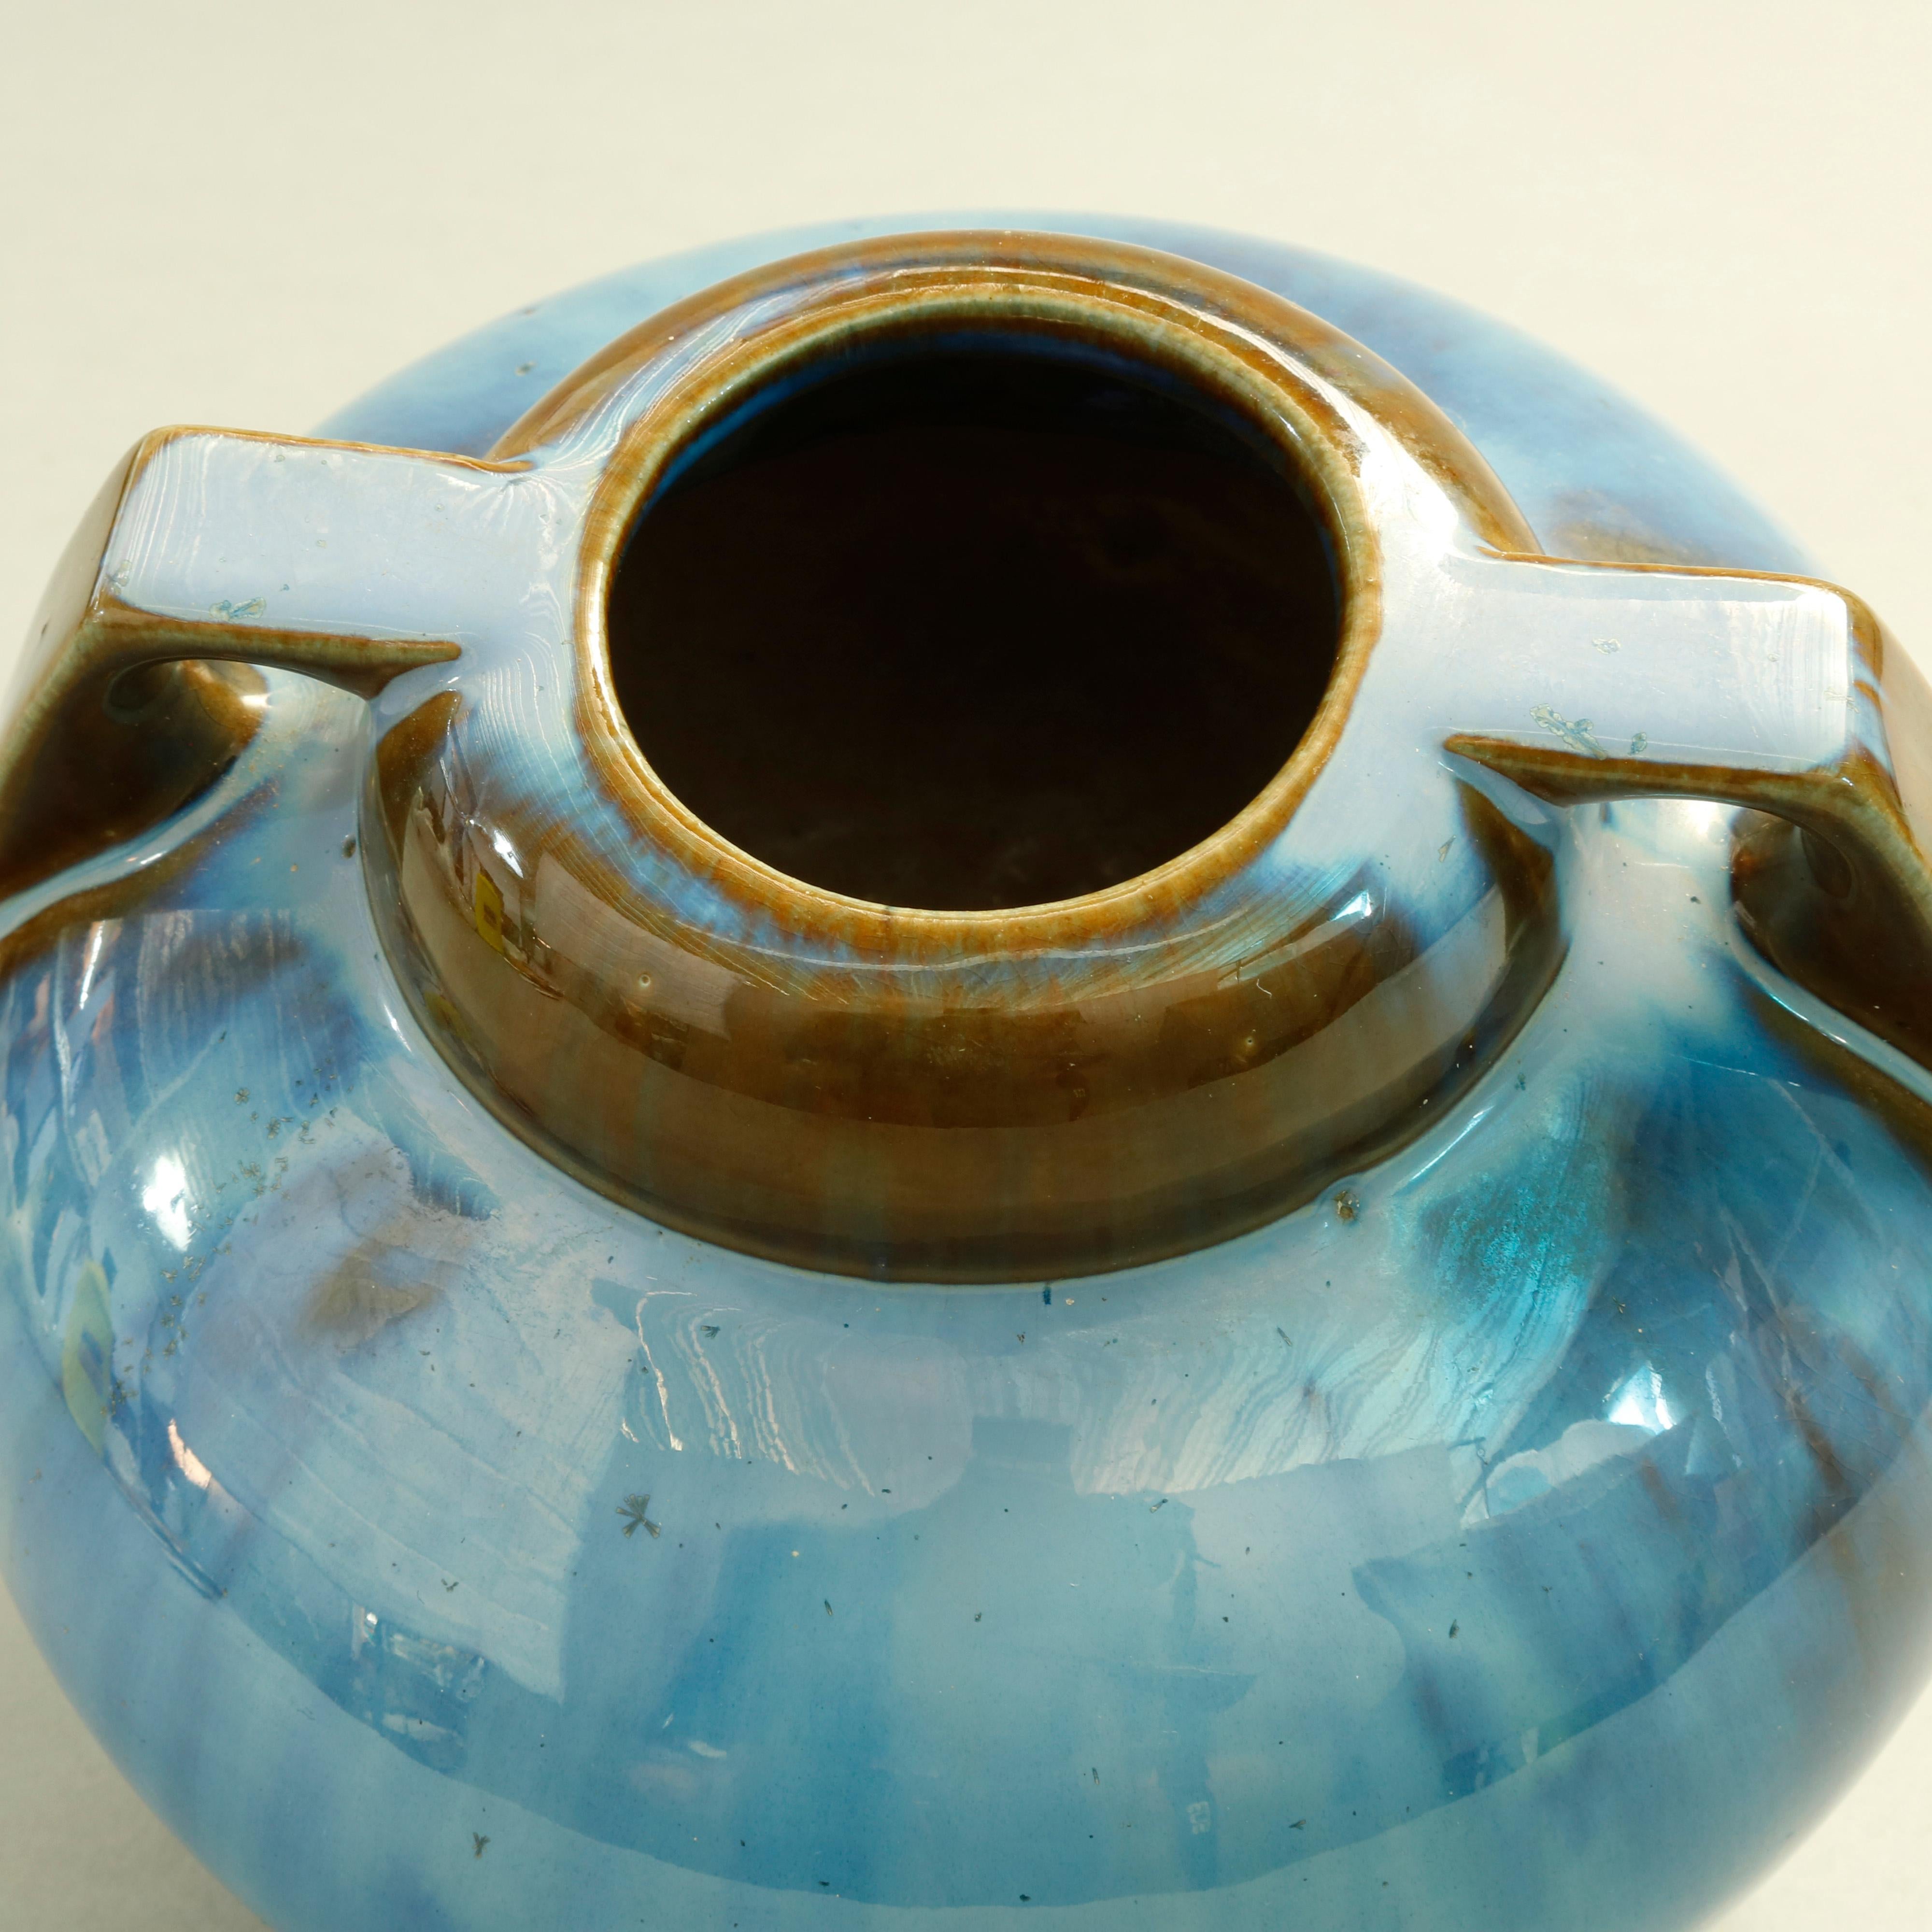 American Vintage Art Pottery Mirrored Glaze Gourd Form Vase by Fulper, 20th Century